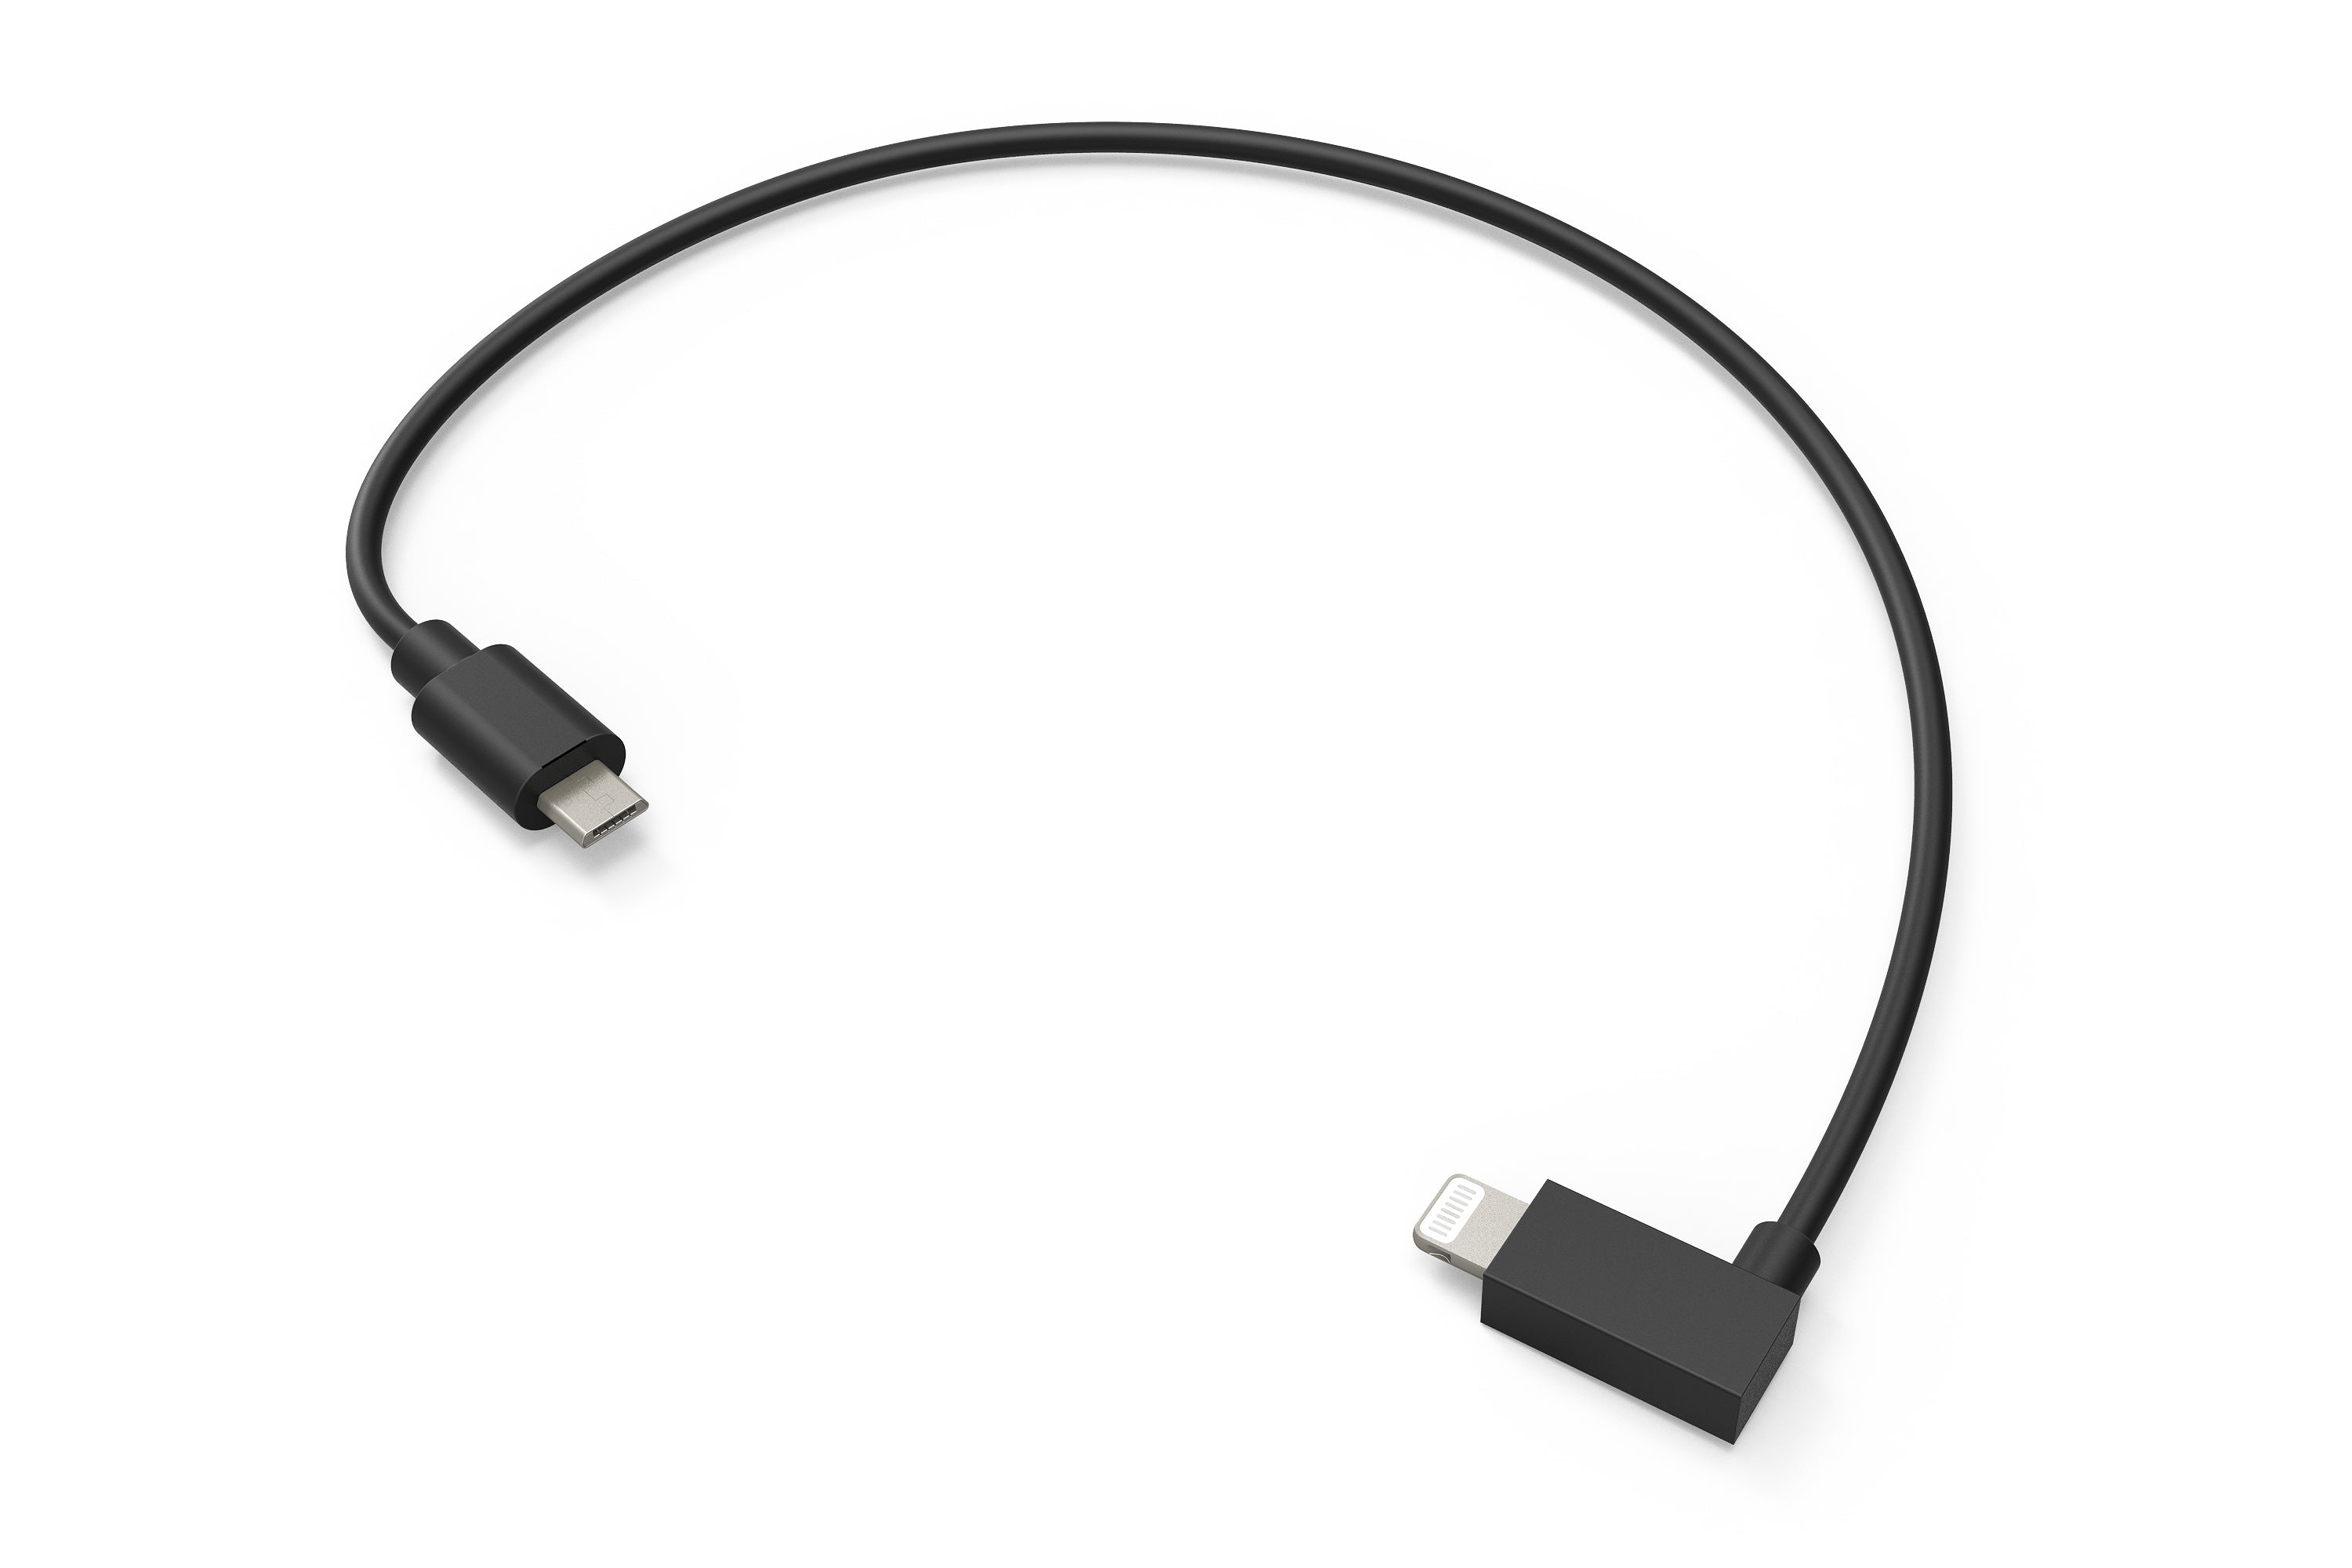 iPad Pro Cargador Cable Cable,[Apple MFi Costa Rica